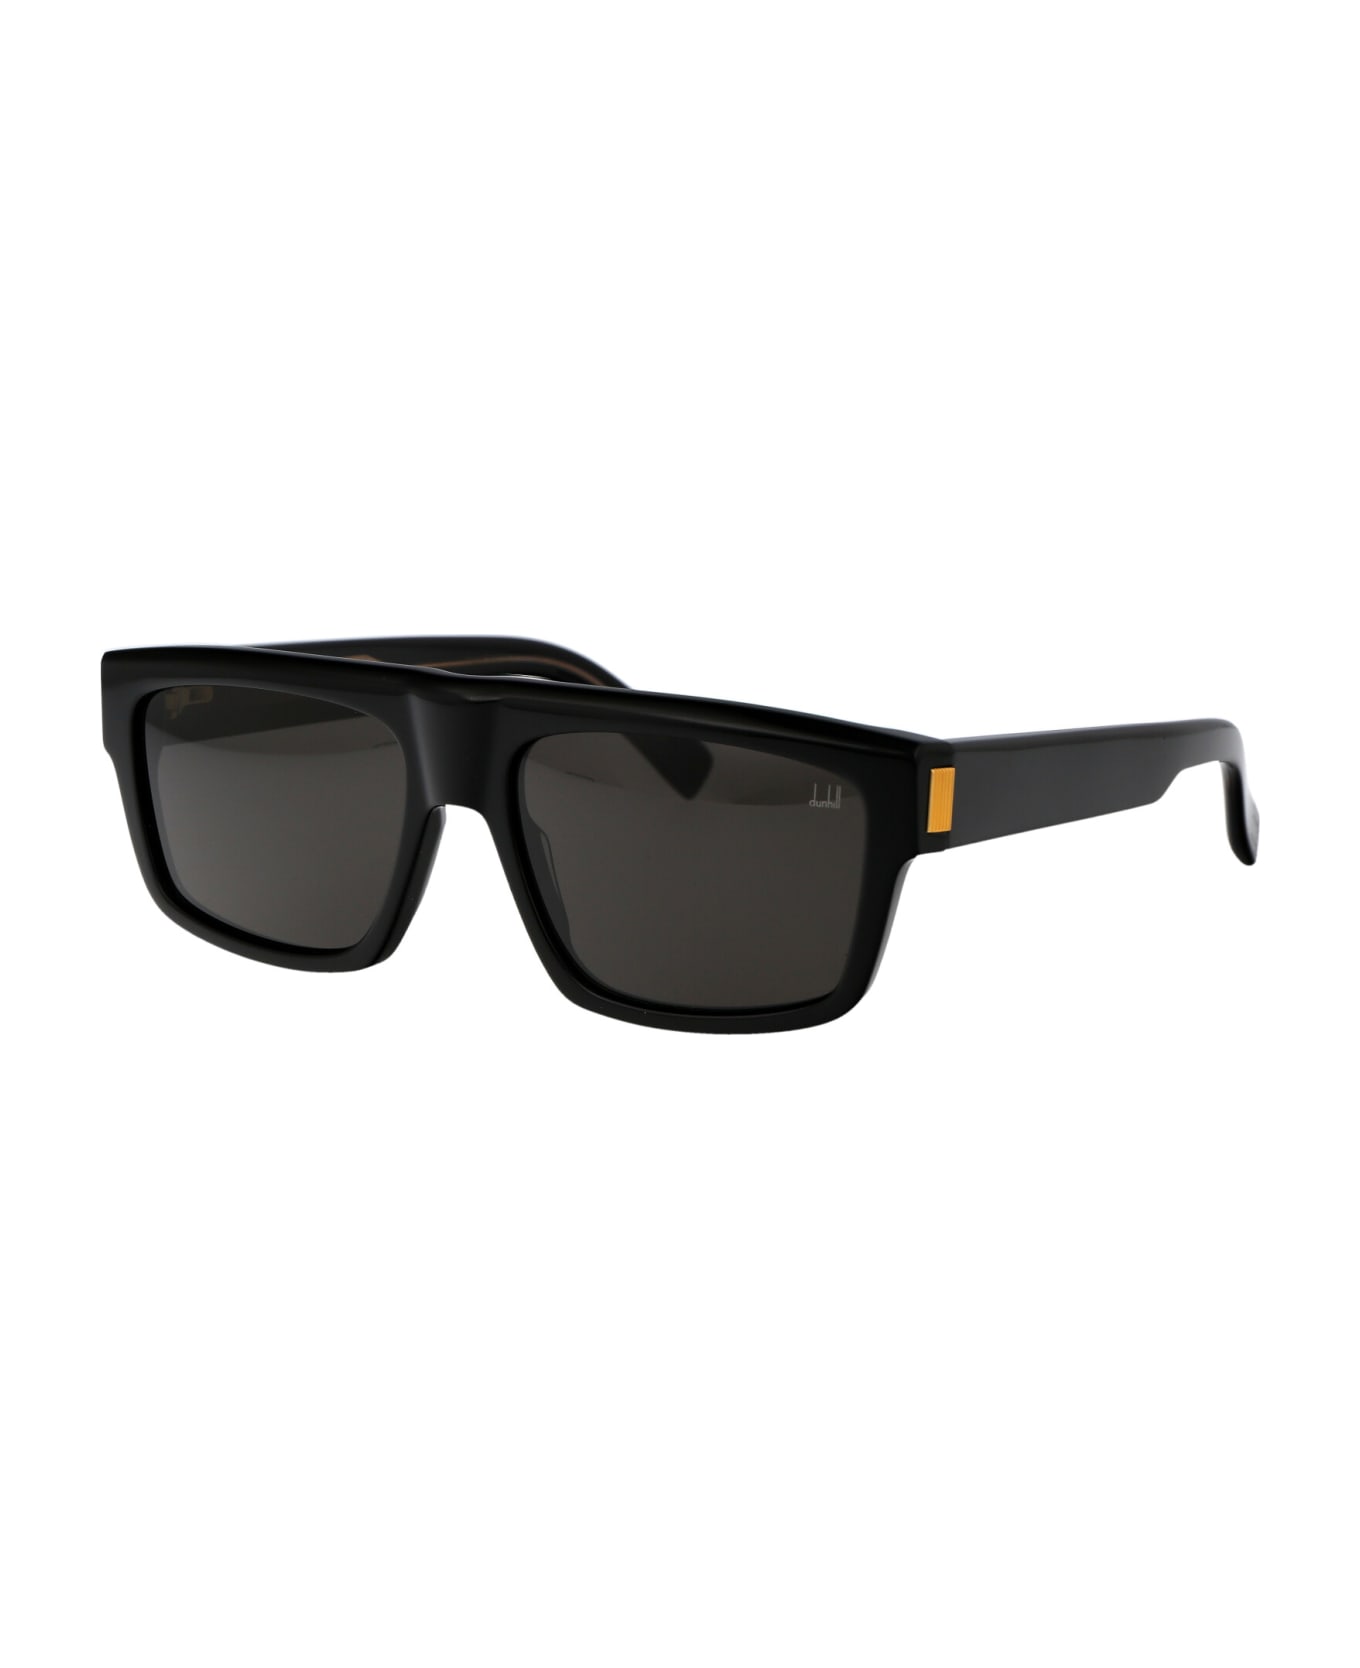 Dunhill Du0055s Sunglasses - 001 BLACK BLACK GREY